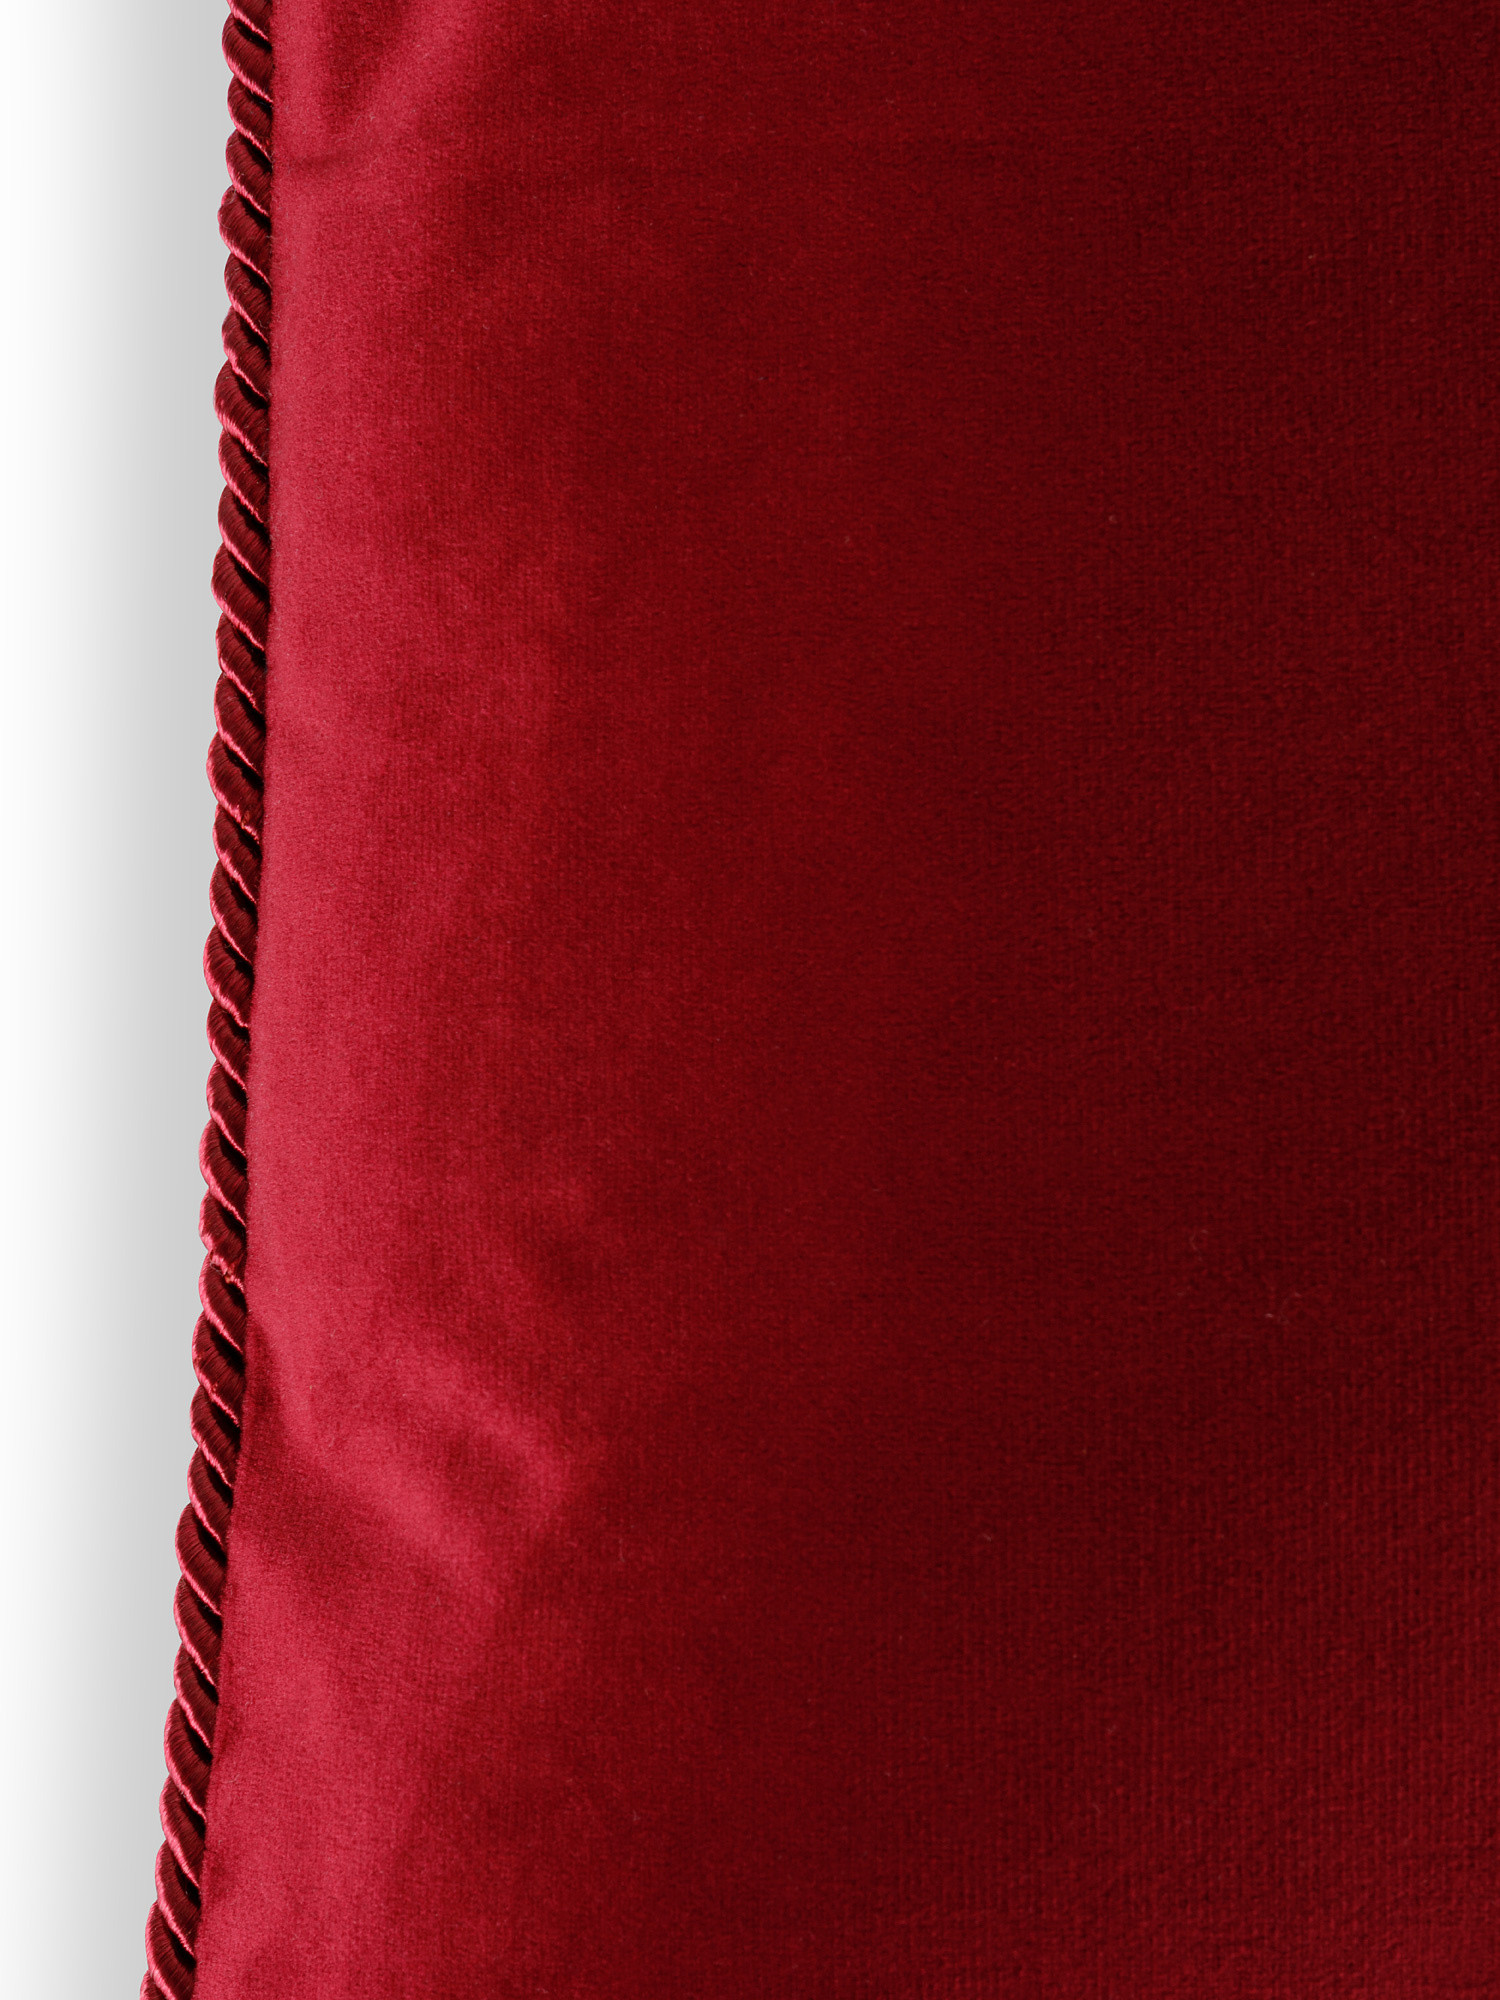 Cuscino velluto tinta unita 45x45cm, Rosso scuro, large